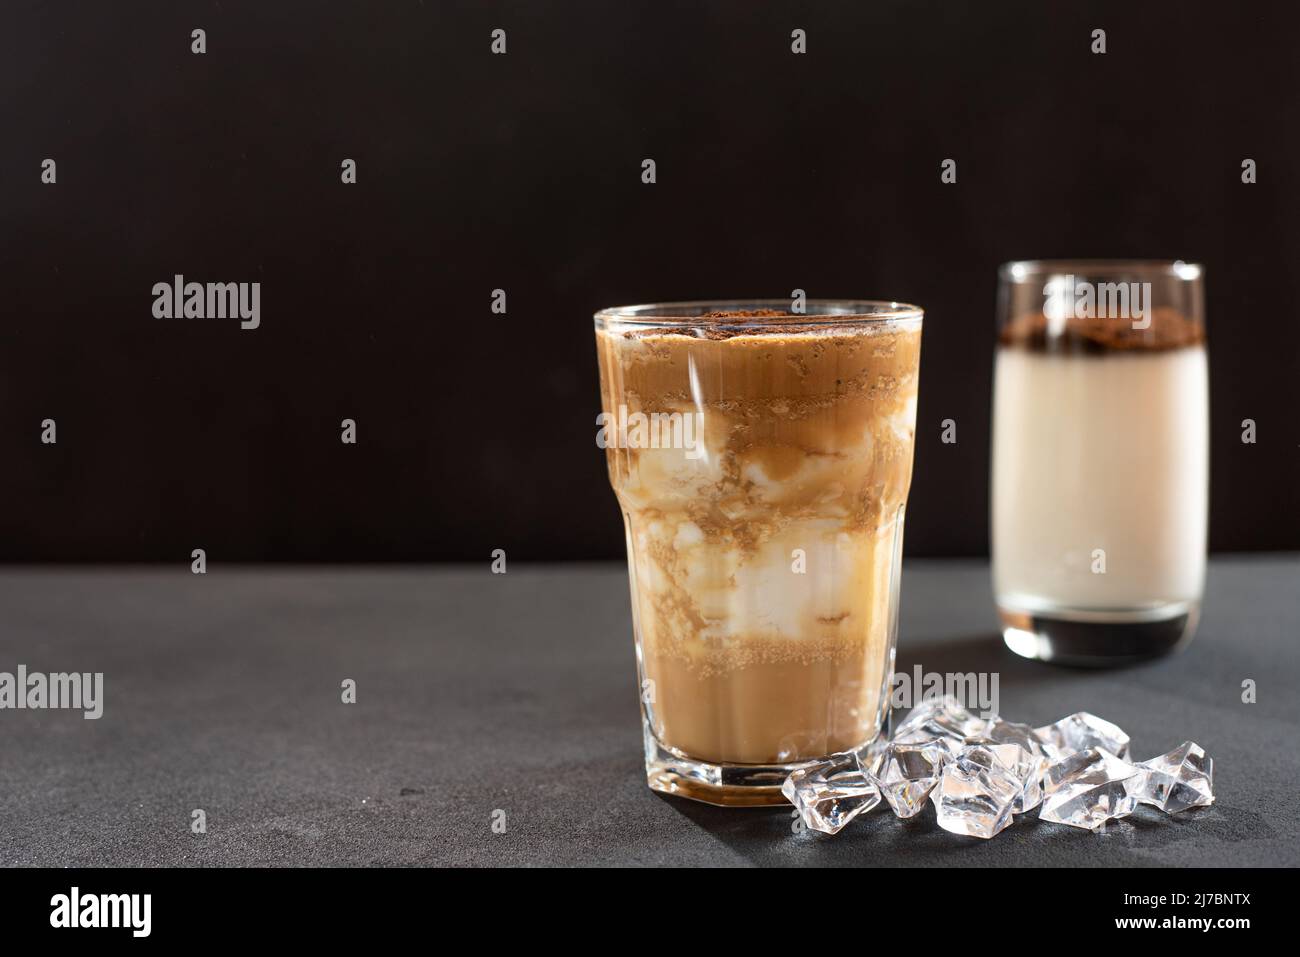 Dalgona coffee with ice on dark background. Horizontal view, copy space. Stock Photo